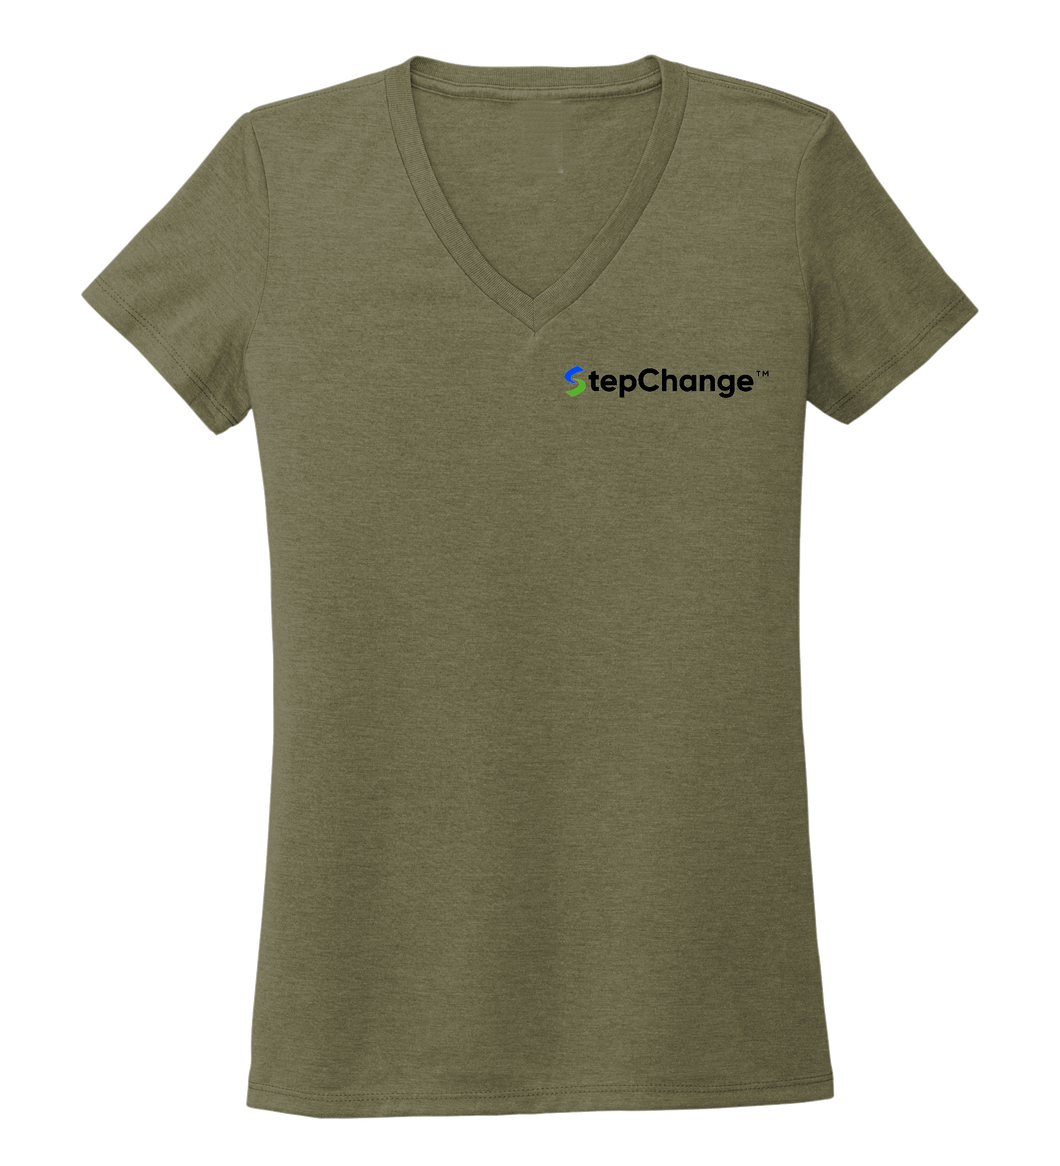 StepChange Women's V-neck T-shirt in Earthy Green